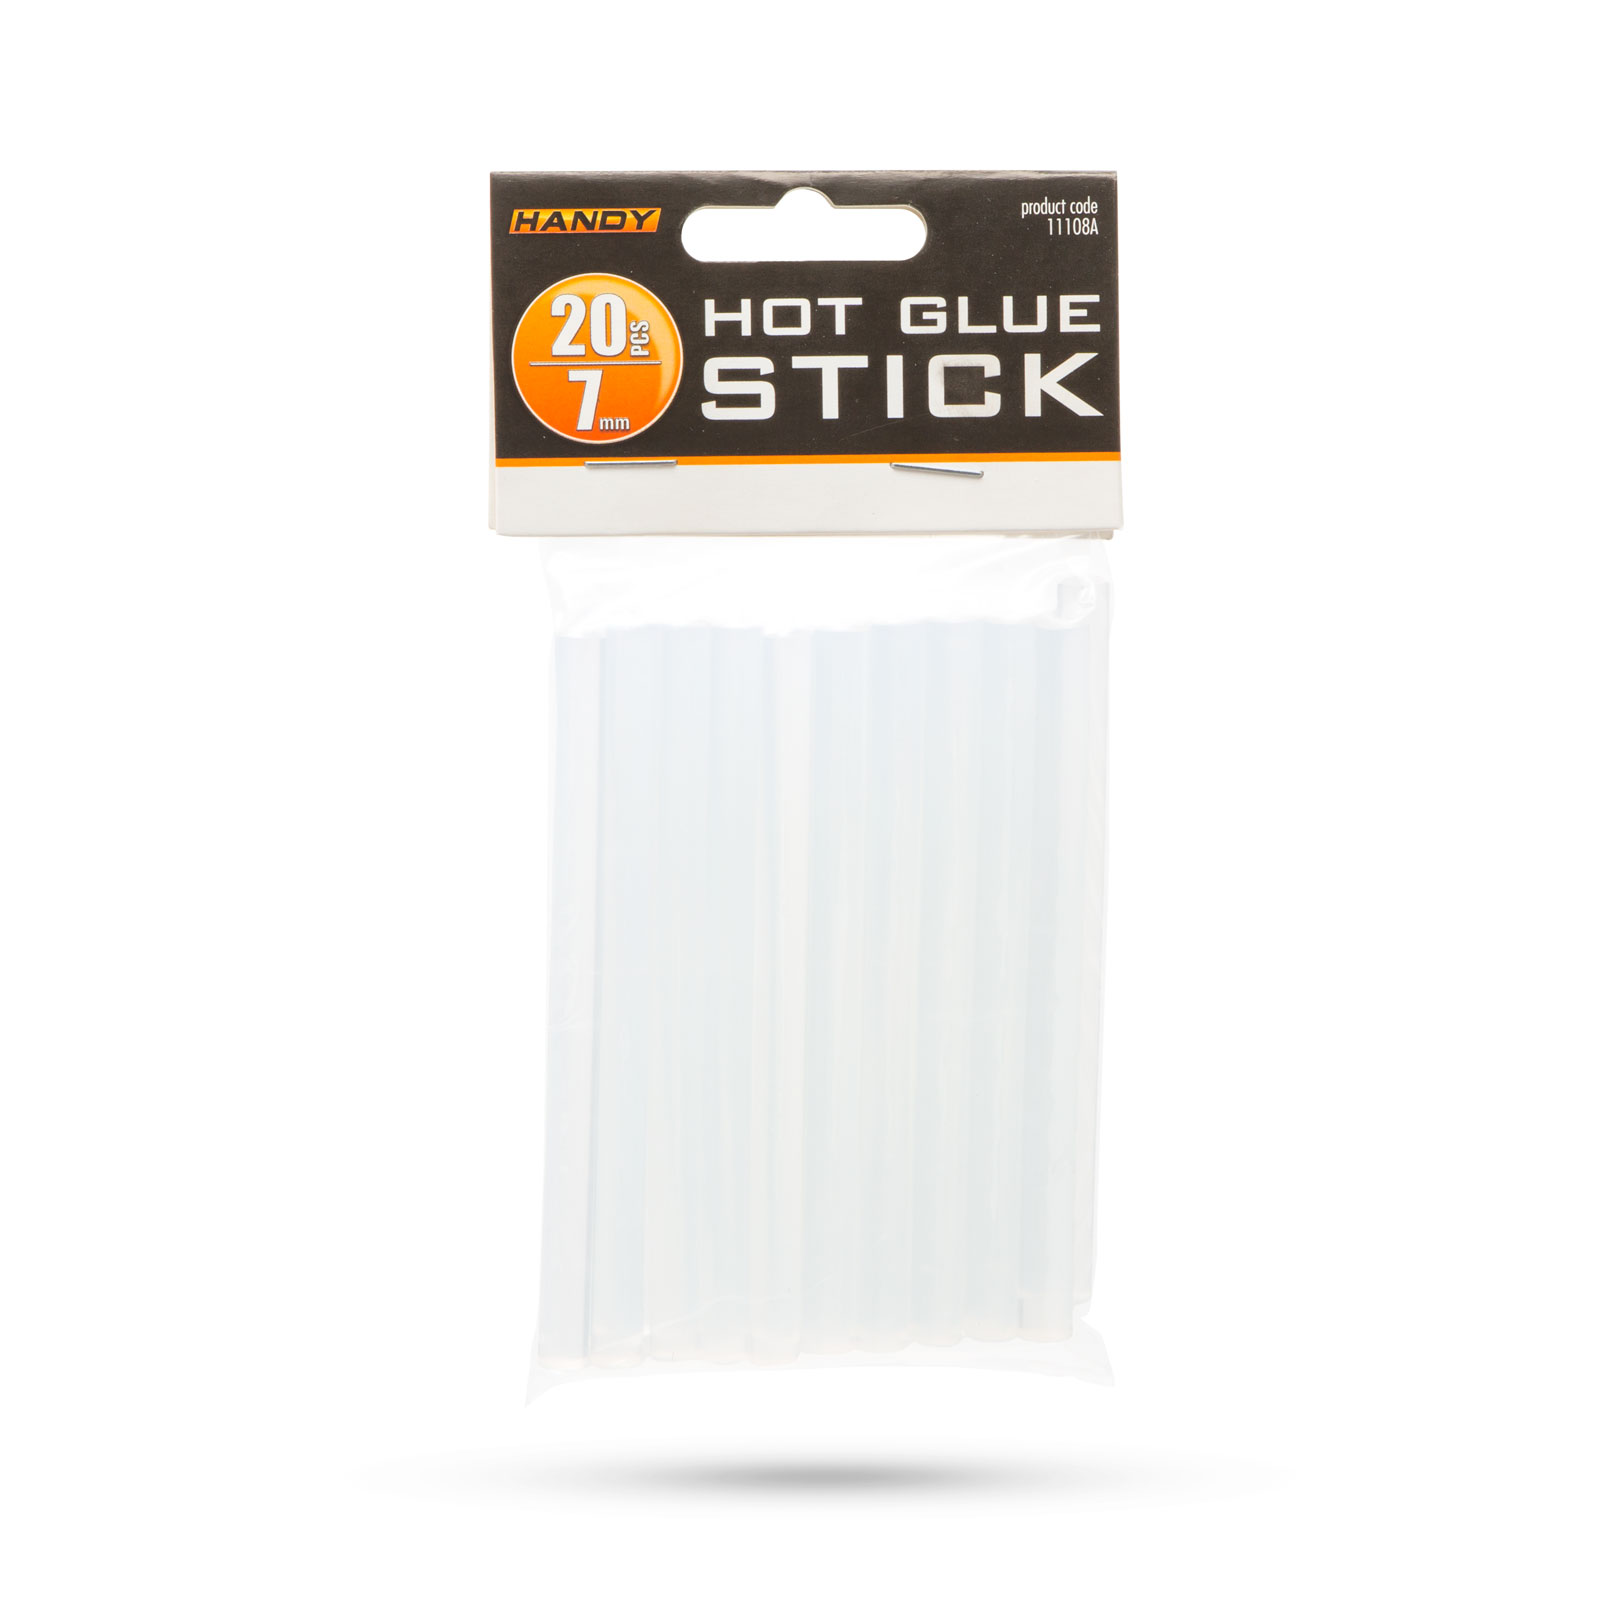 Hot glue stick - 7 mm - transparent thumb